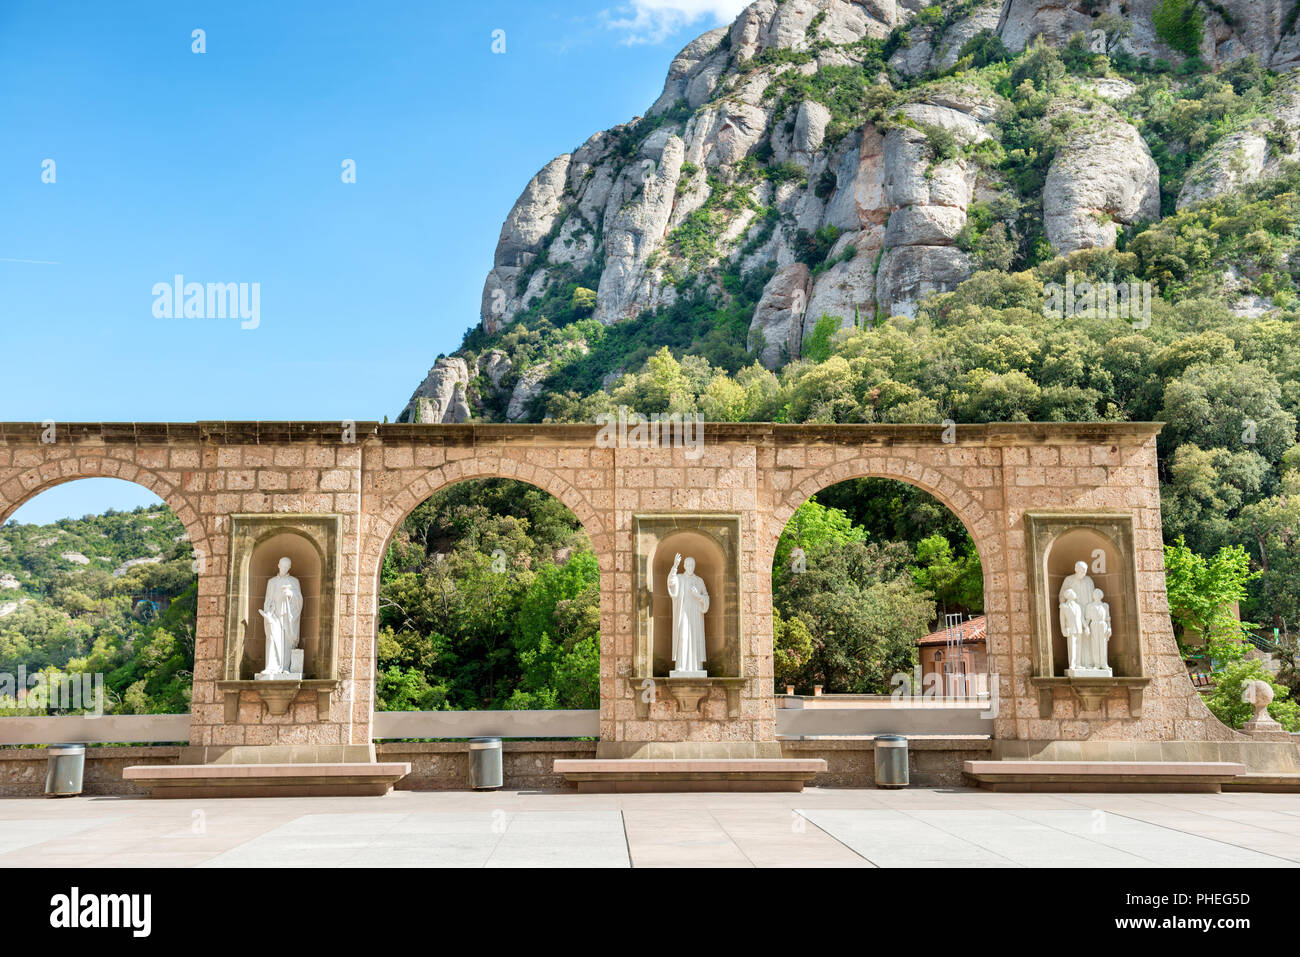 Statues on square in Montserrat monastery Stock Photo